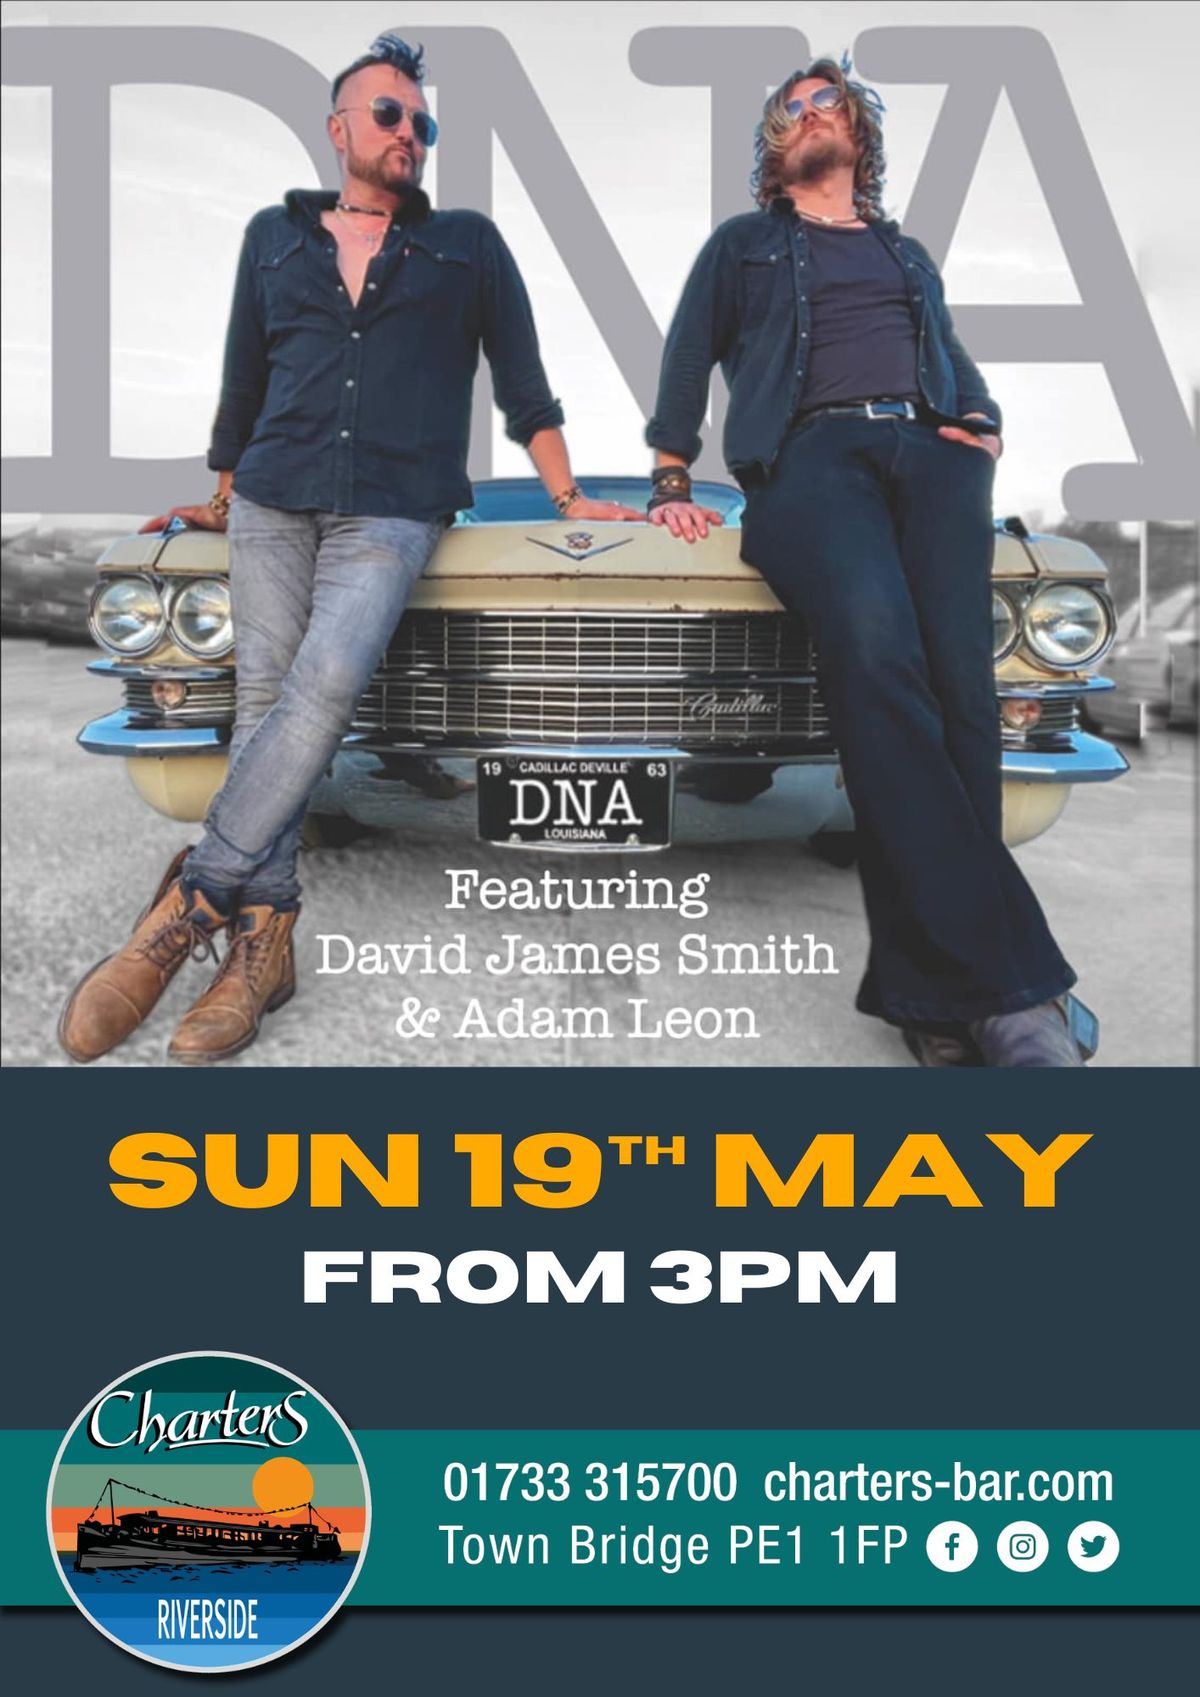 DNA - David James Smith & Adam Leon duo 